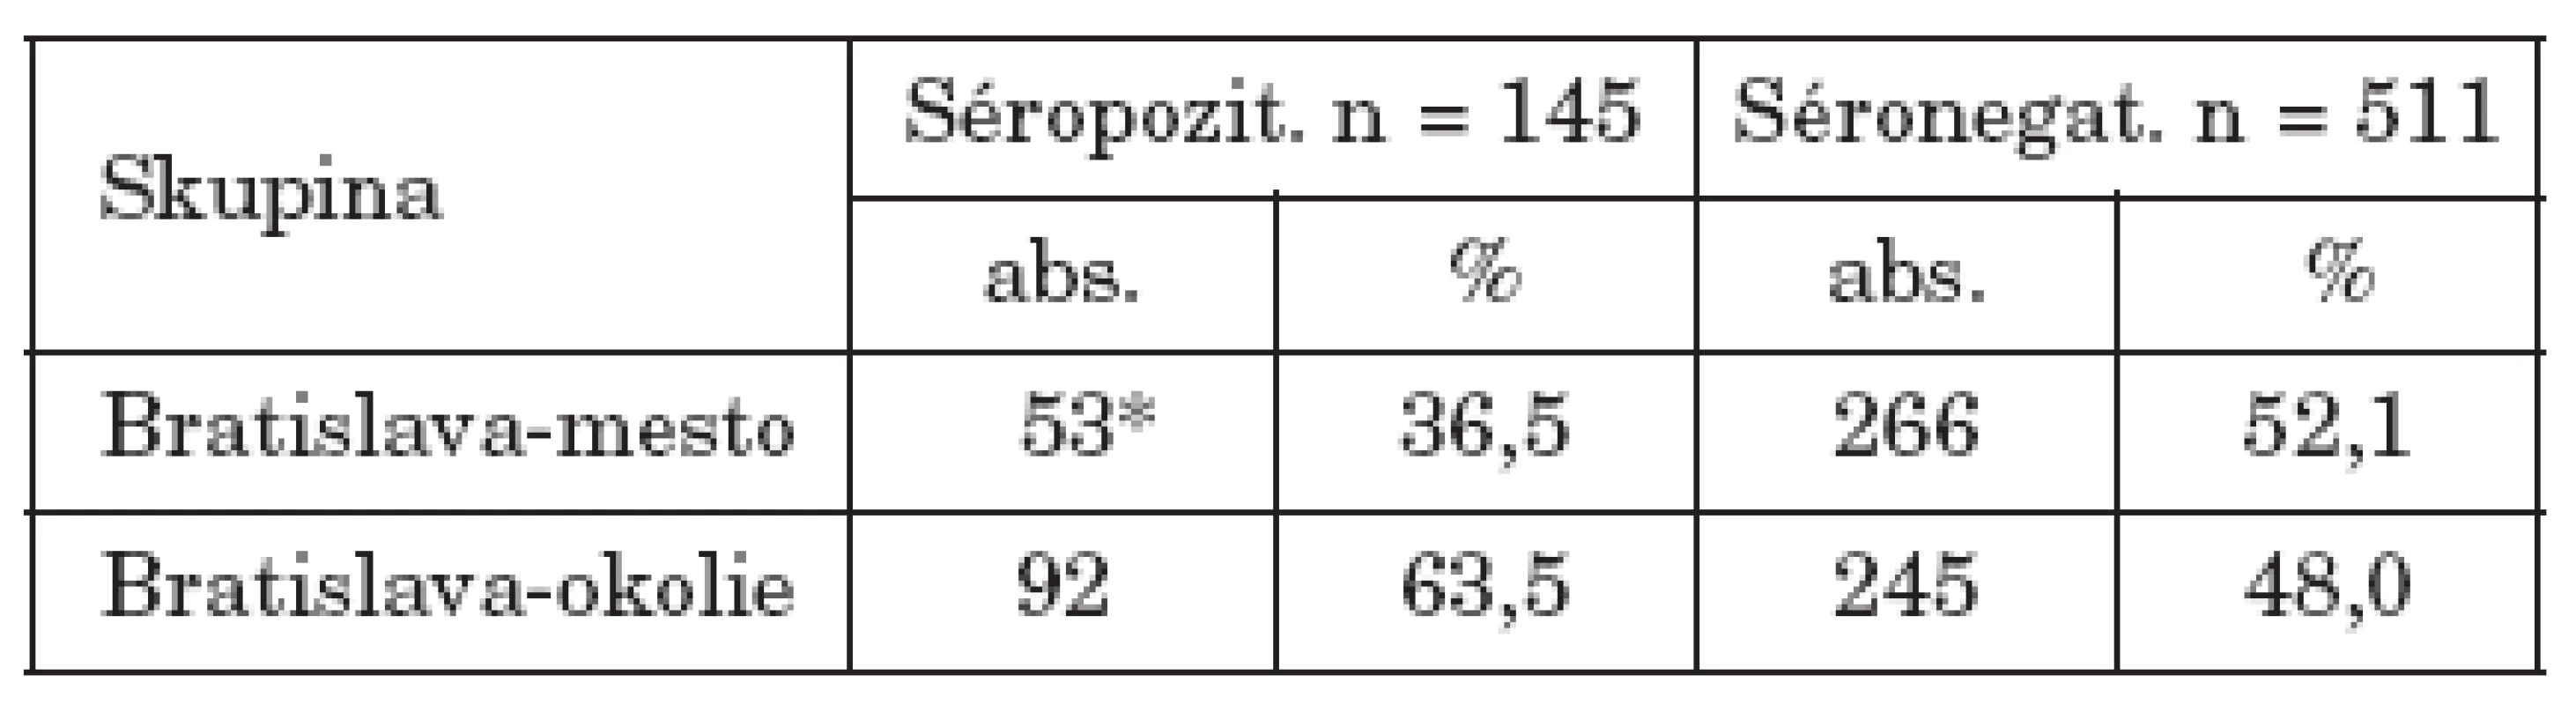 Séroprevalencia toxoplazmózy u gravidných žien podľa bydliska
Table 3. Seroprevalence of toxoplasmosis in pregnant women by place of residence